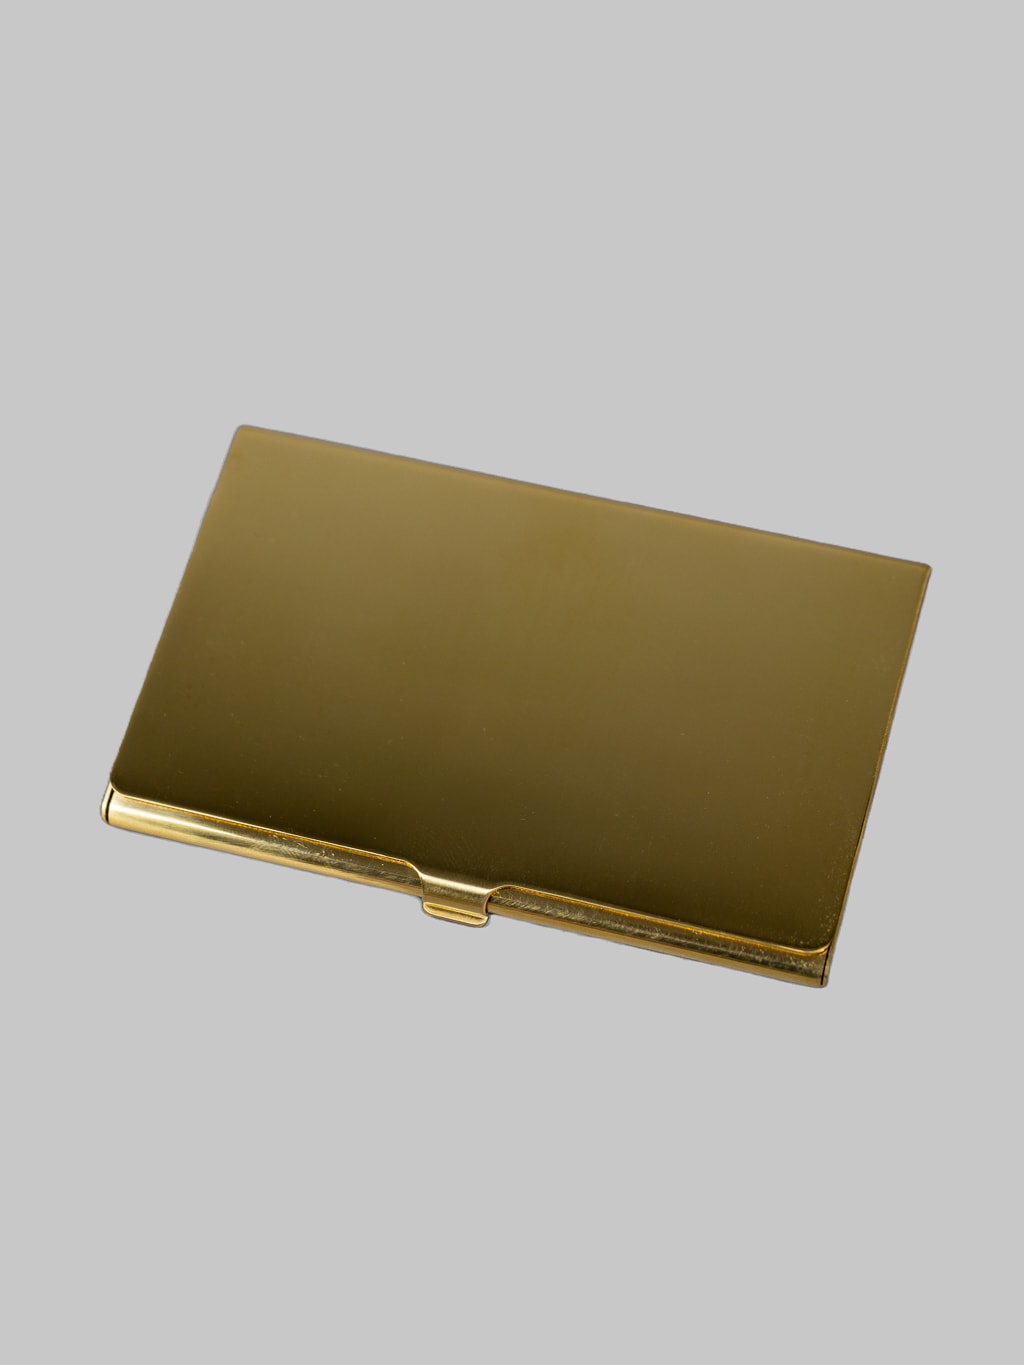 Kobashi Studio Card Case Solid Brass vintage style